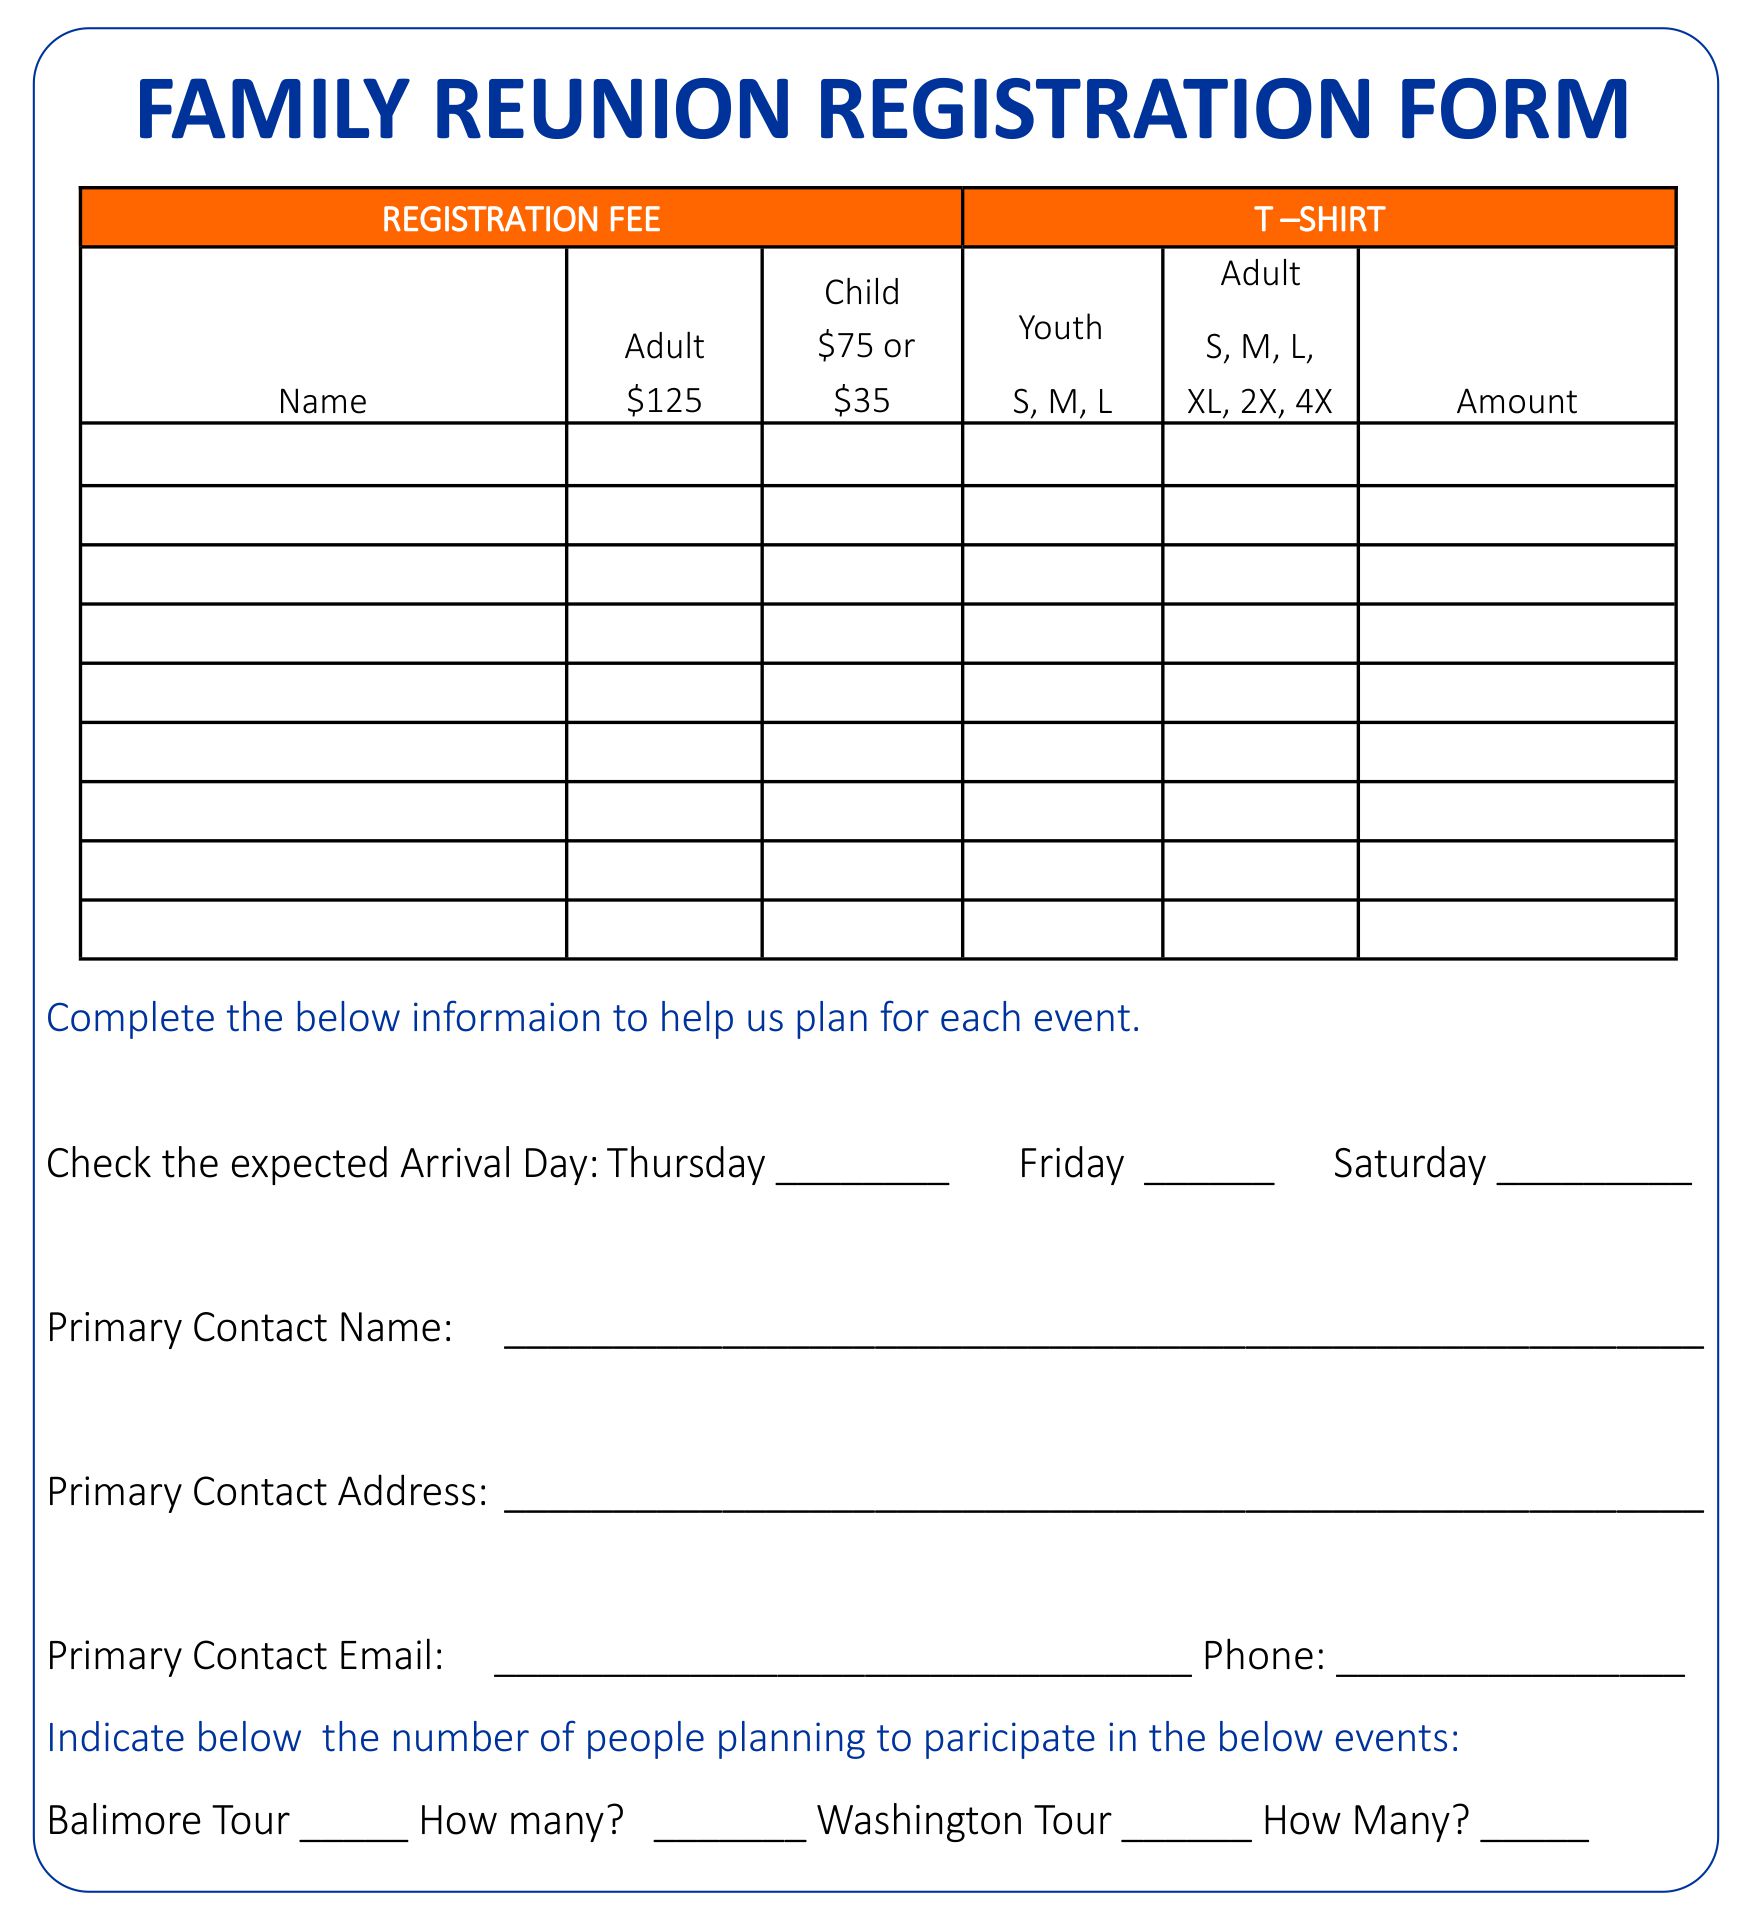 family-reunion-registration-form-template